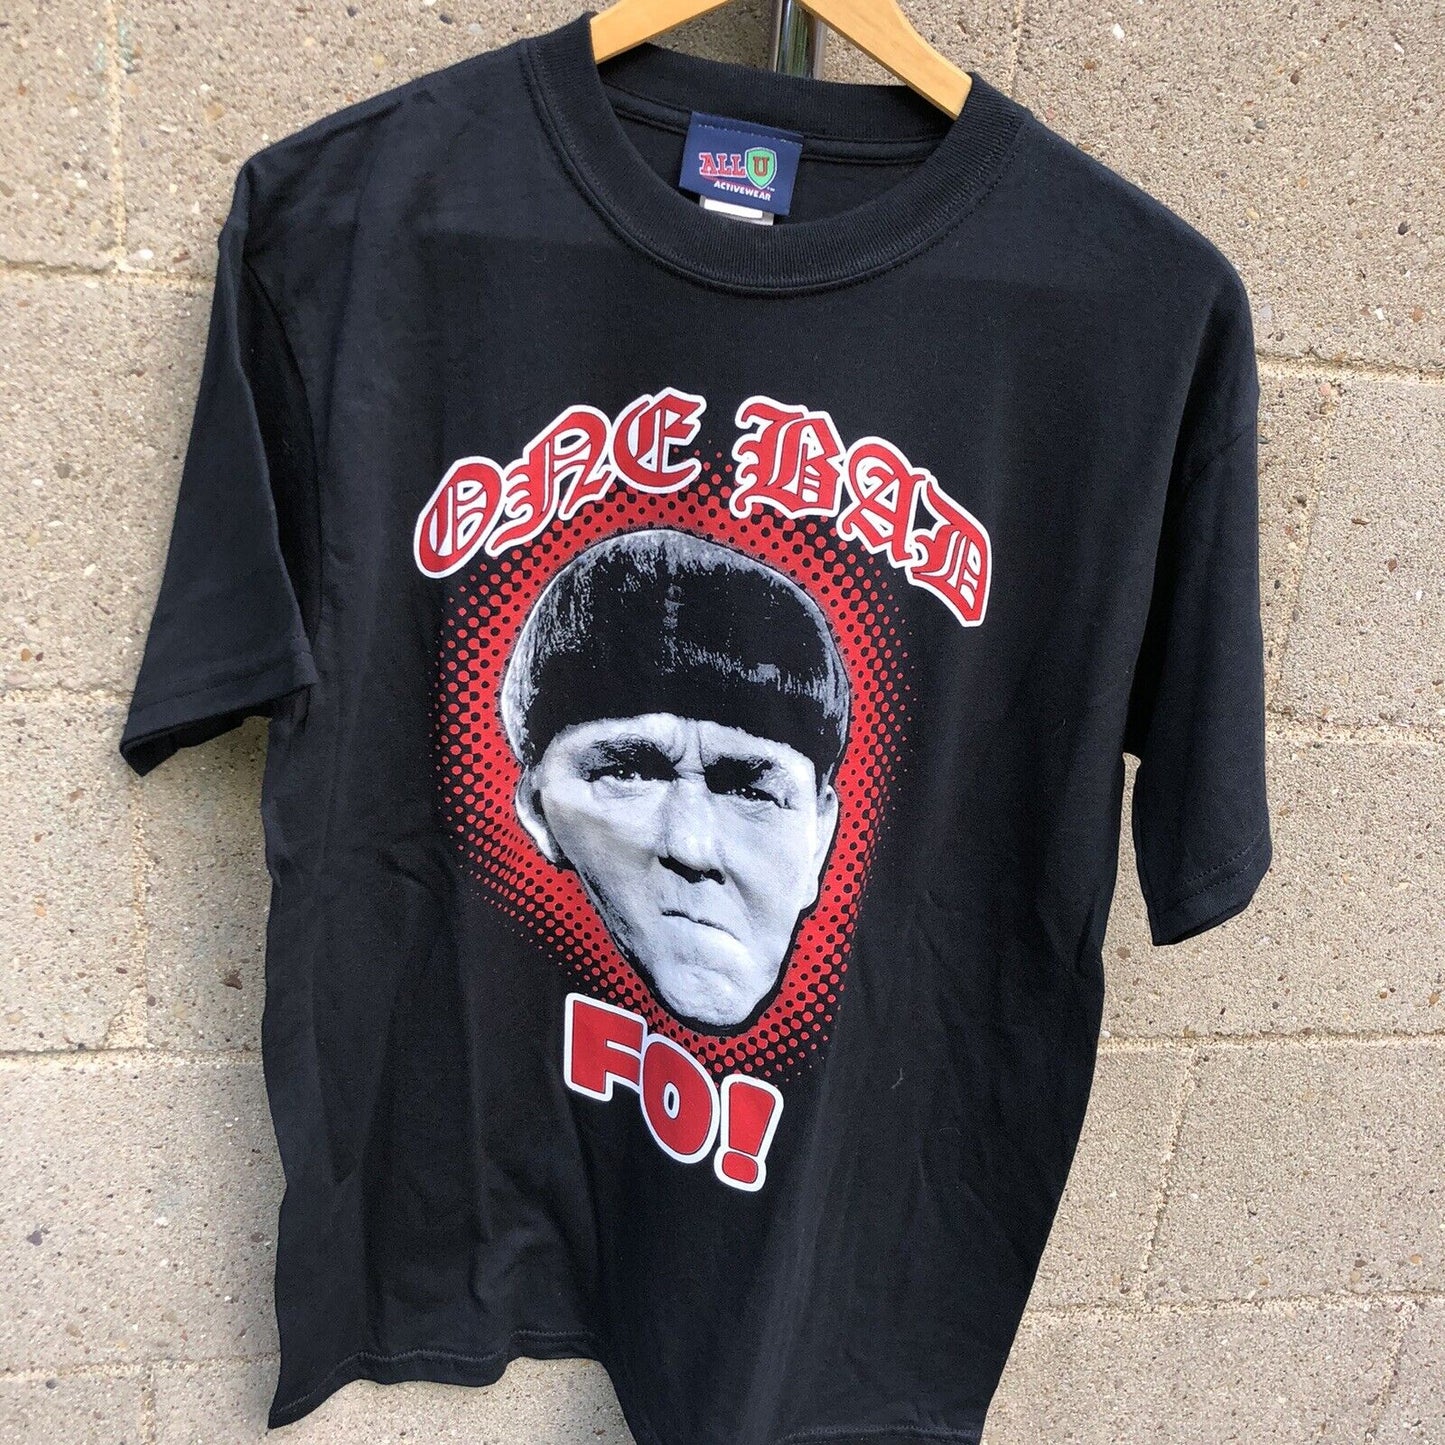 Vintage 3 Stooges T Shirt Size Medium One Bad Fo